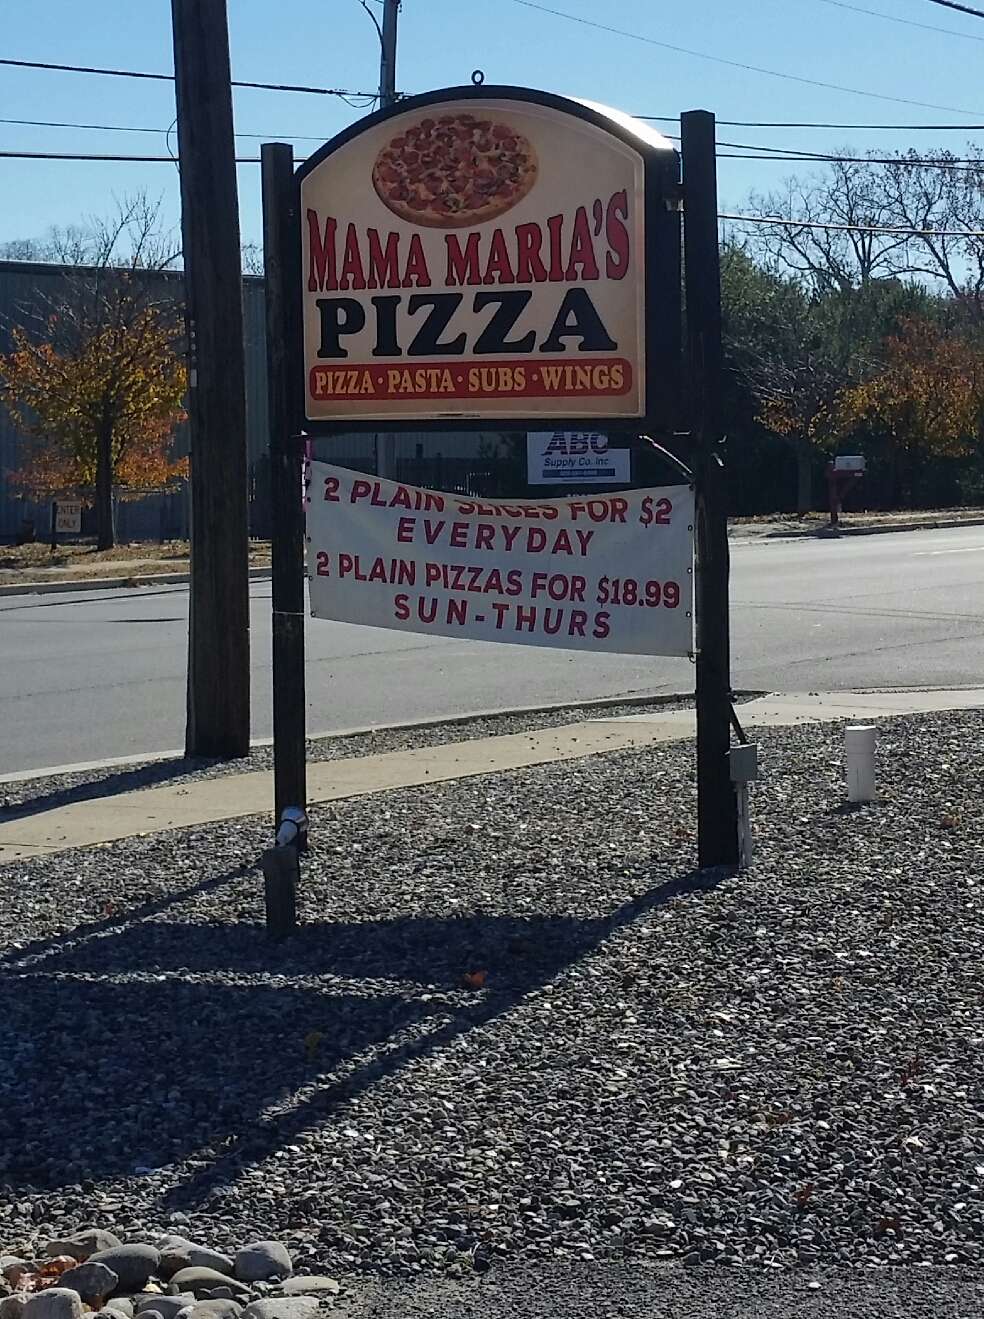 Mama Marias Pizza | 1116 S Main St, West Creek, NJ 08092, USA | Phone: (609) 978-5555